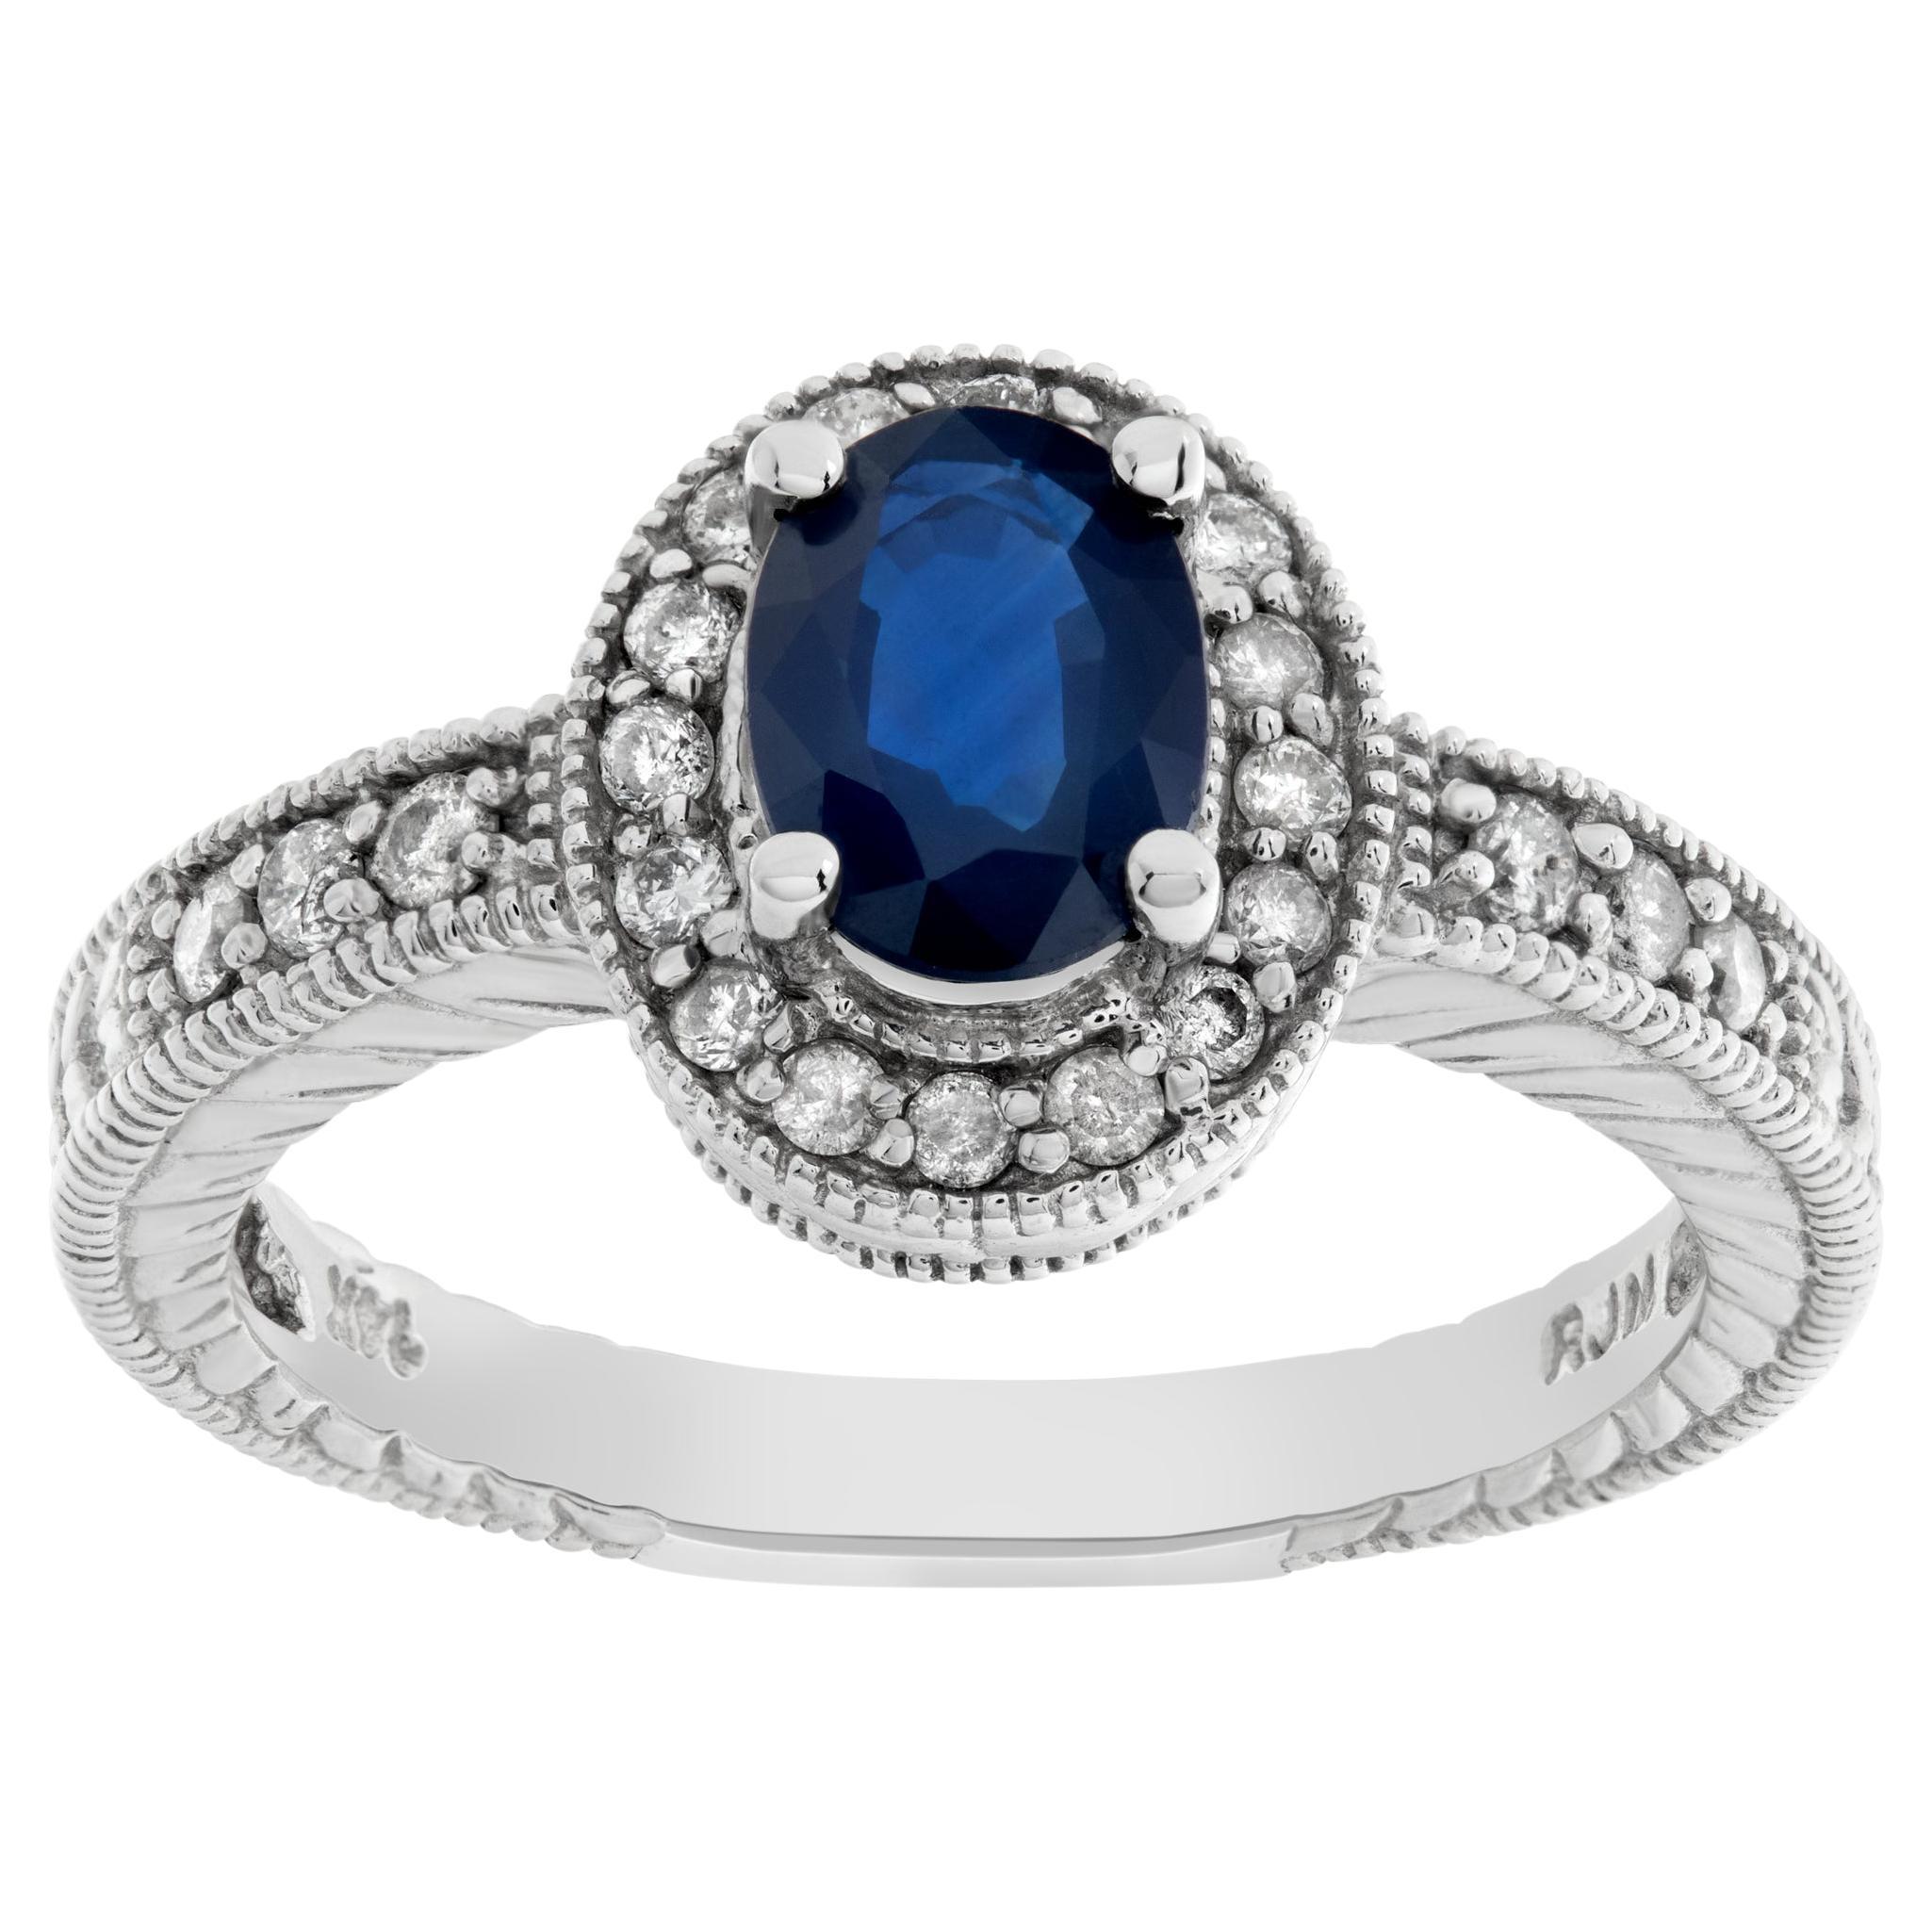 Oval Brilliant Cut Sapphire & Diamonds Ring Set in 14k White Gold For Sale